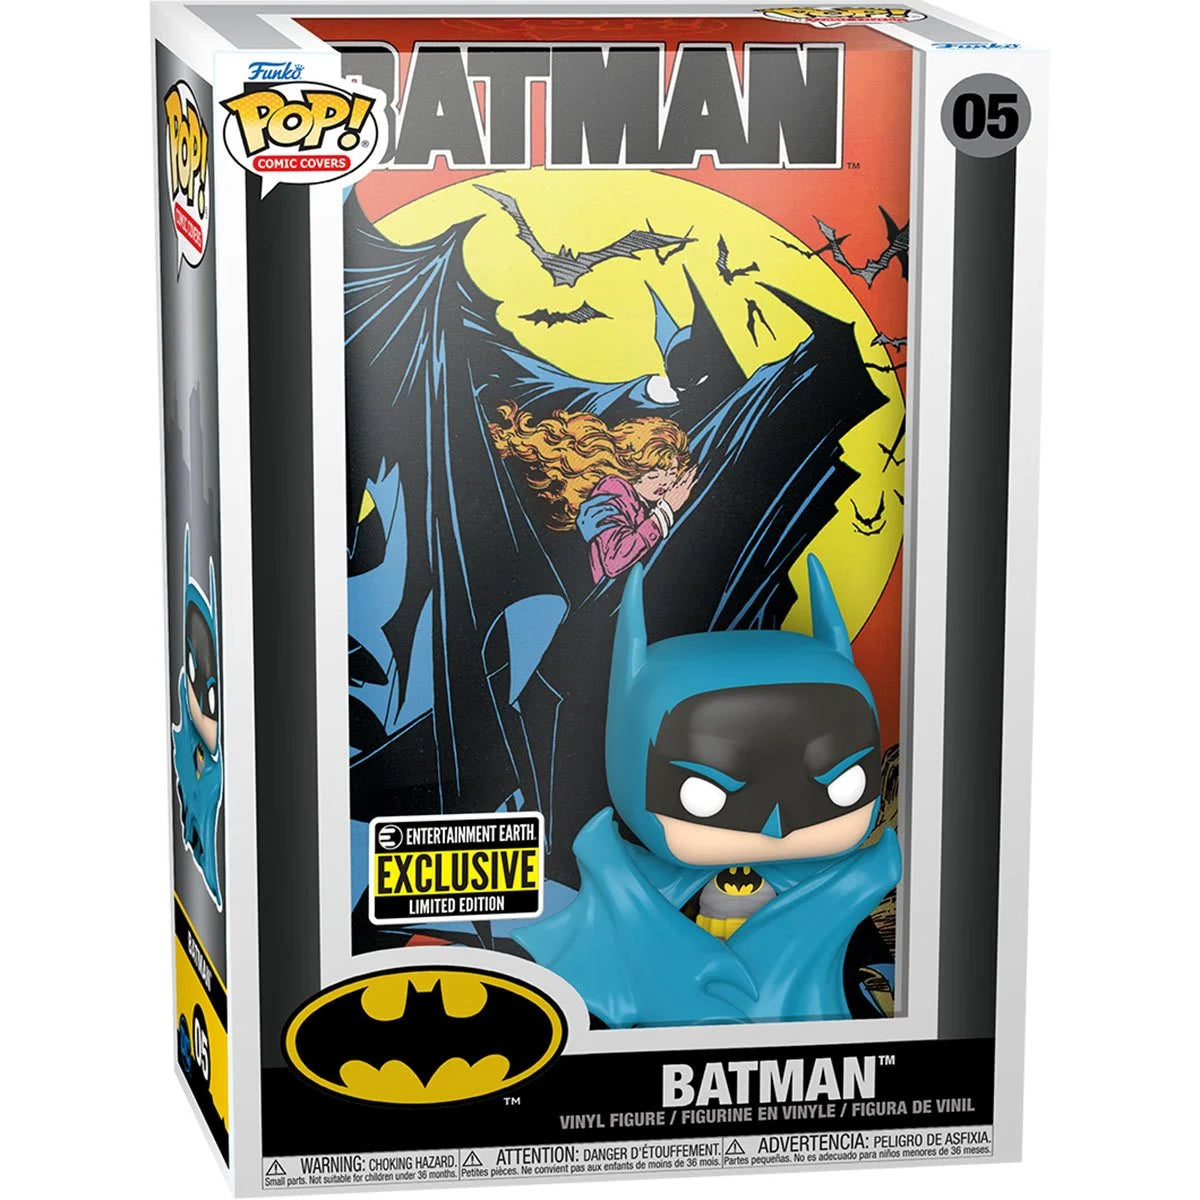 Batman #423 McFarlane Pop! Comic Cover Figure